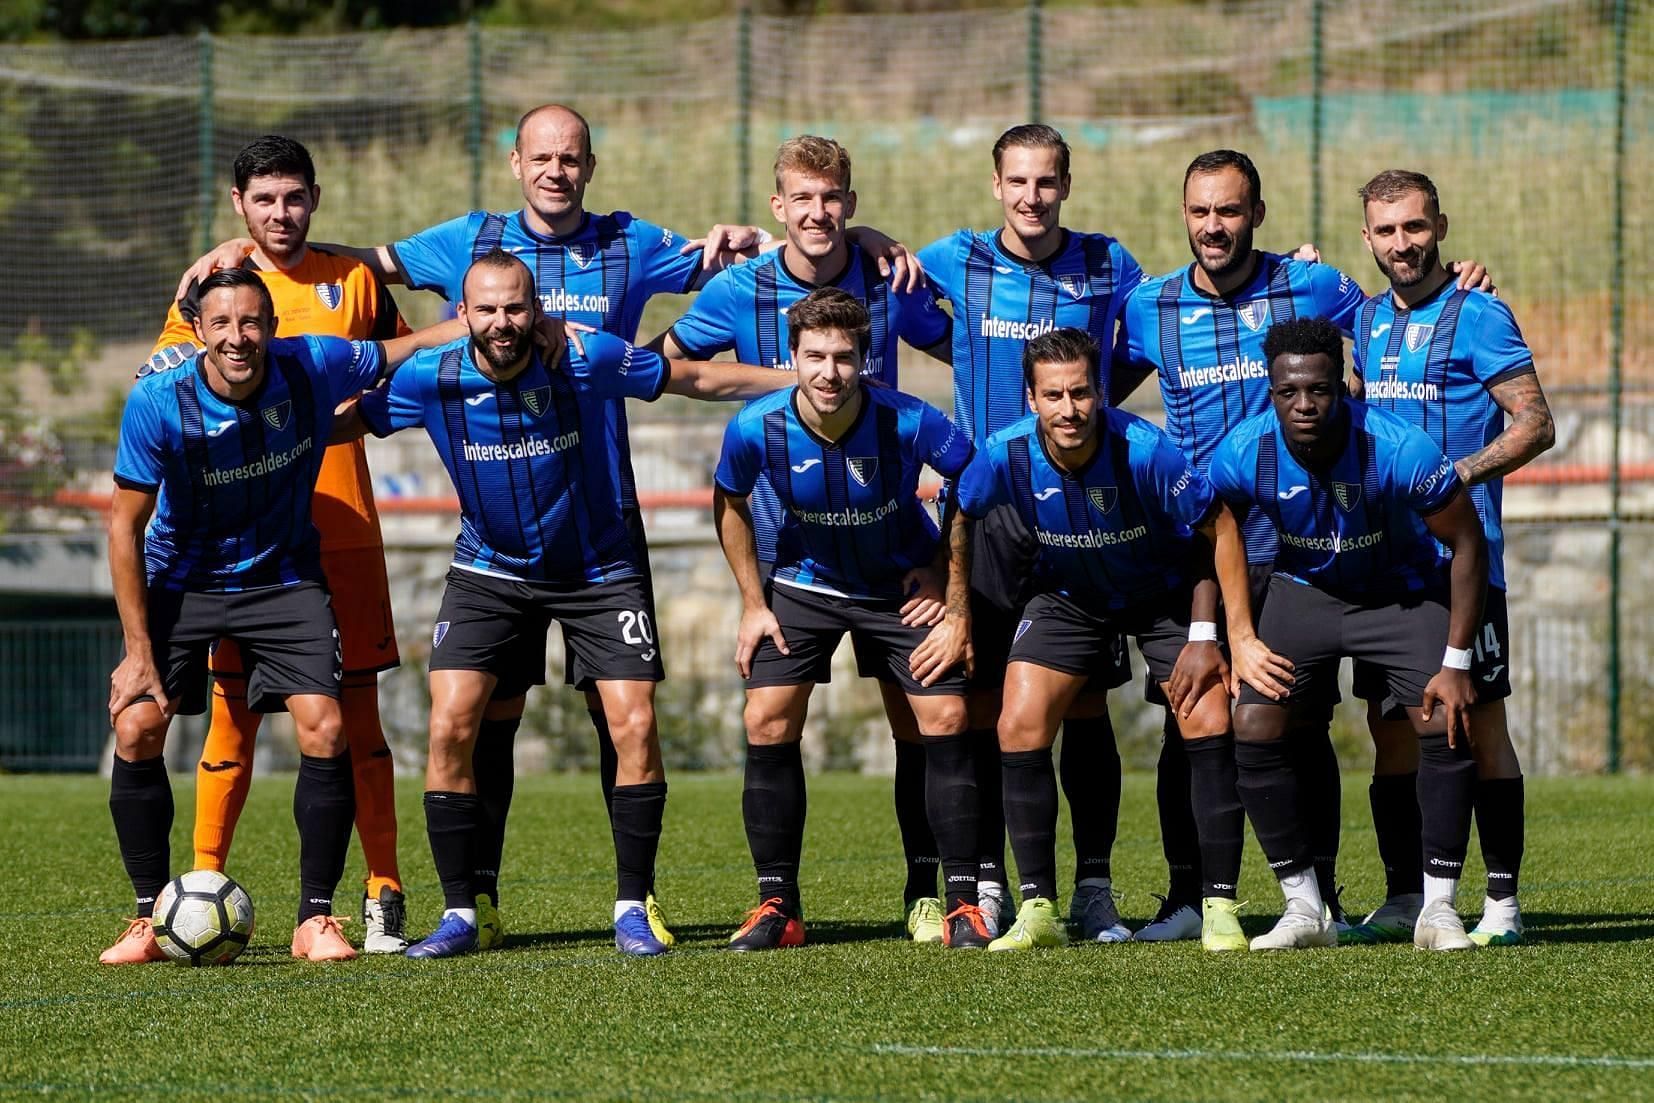 Inter Club d&#039;Escaldes take on La Fiorita this weekend